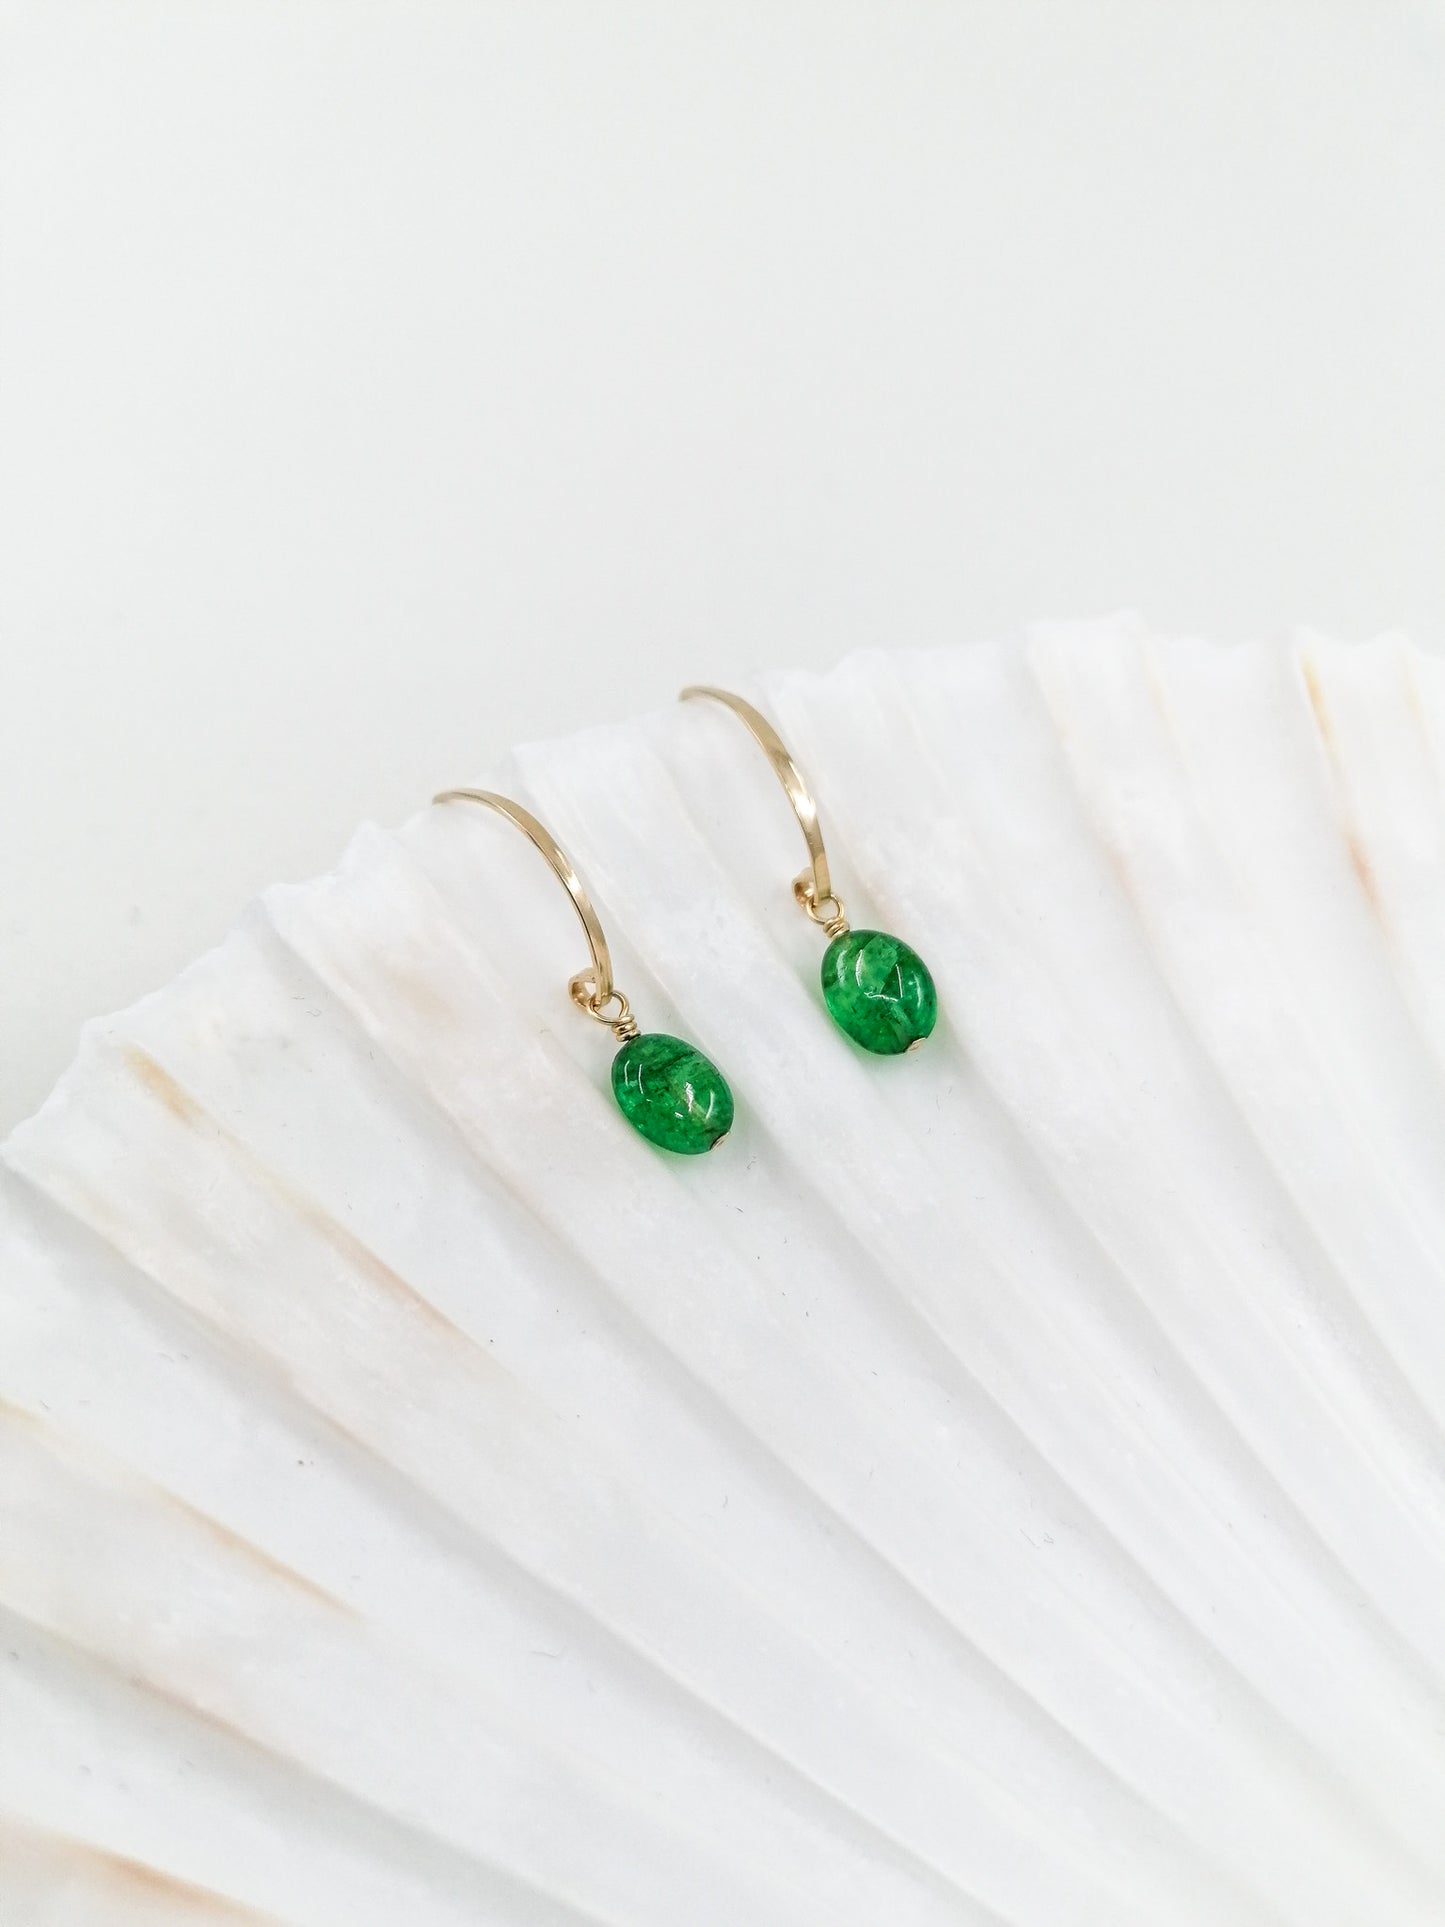 Oval emerald earrings - gold filled